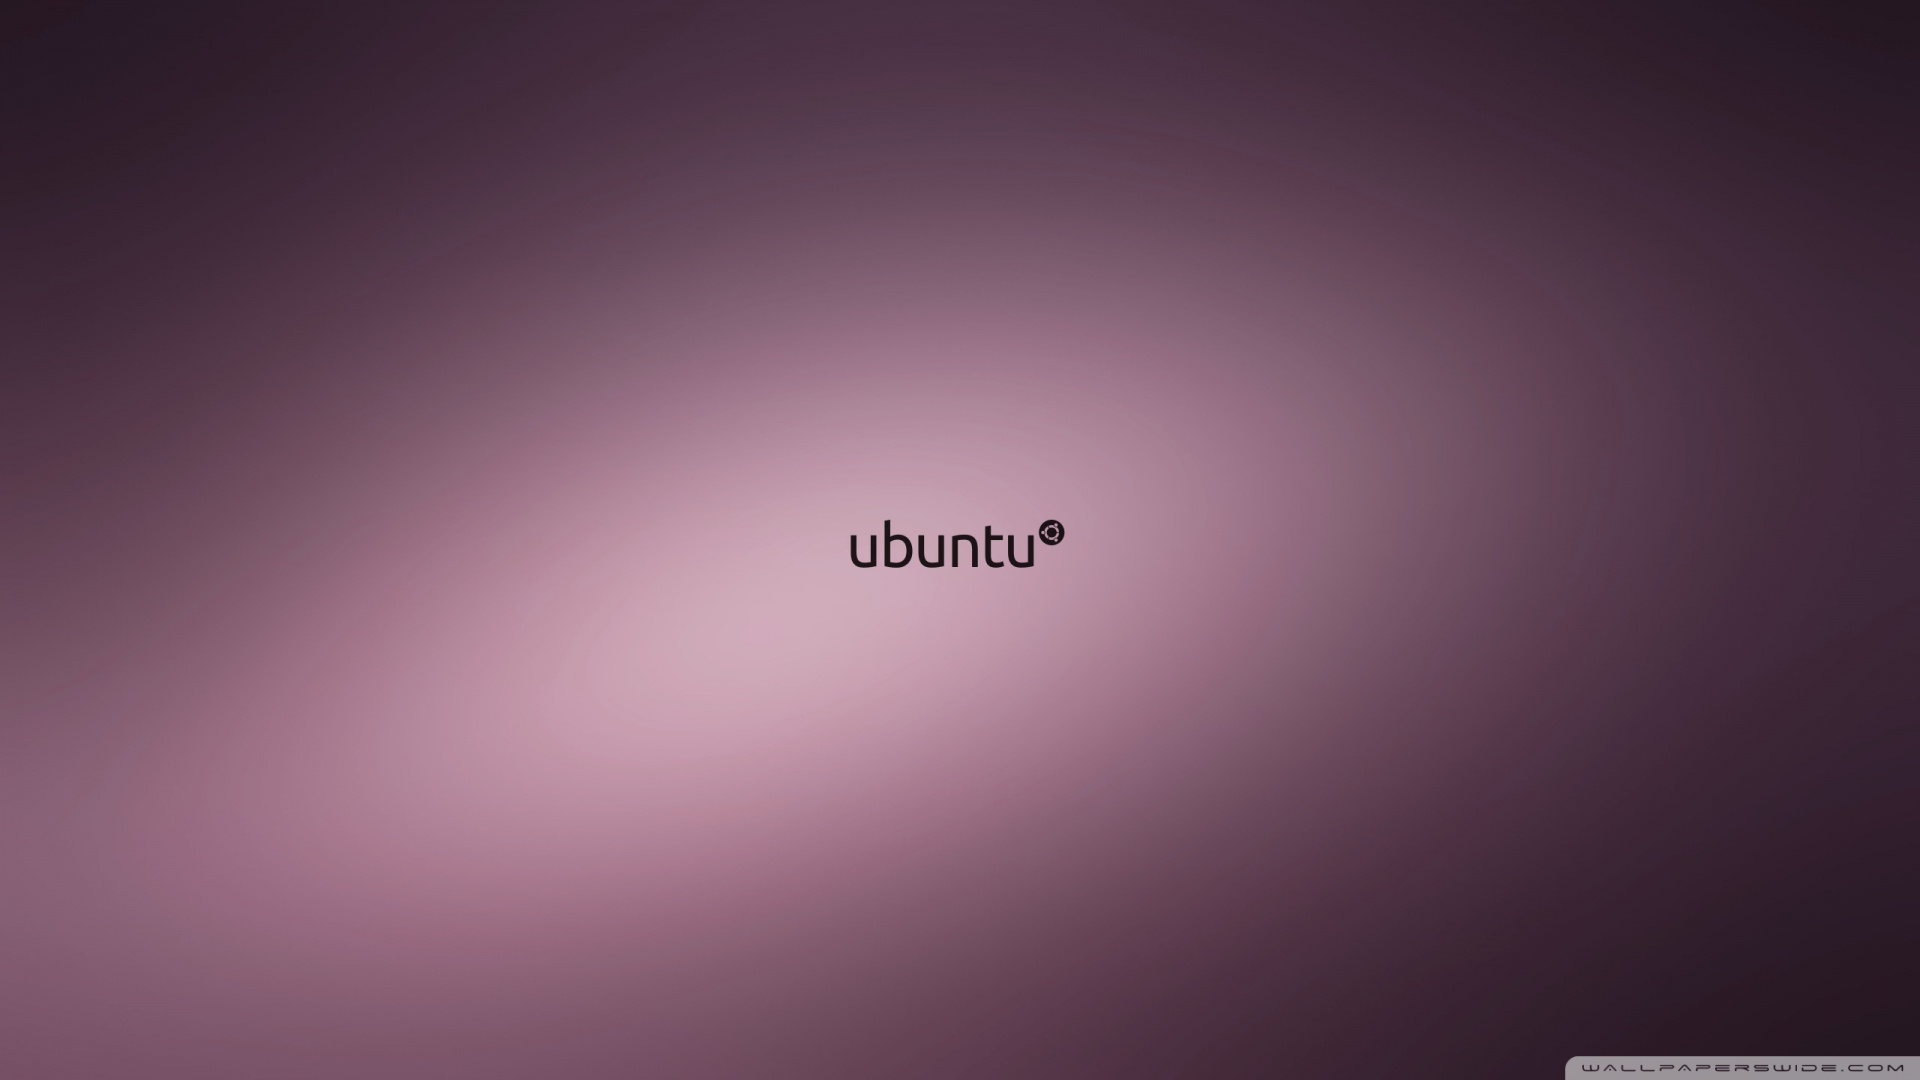 Minimalist Ubuntu Wallpaper 1920x1080 Minimalist Ubuntu 1920x1080